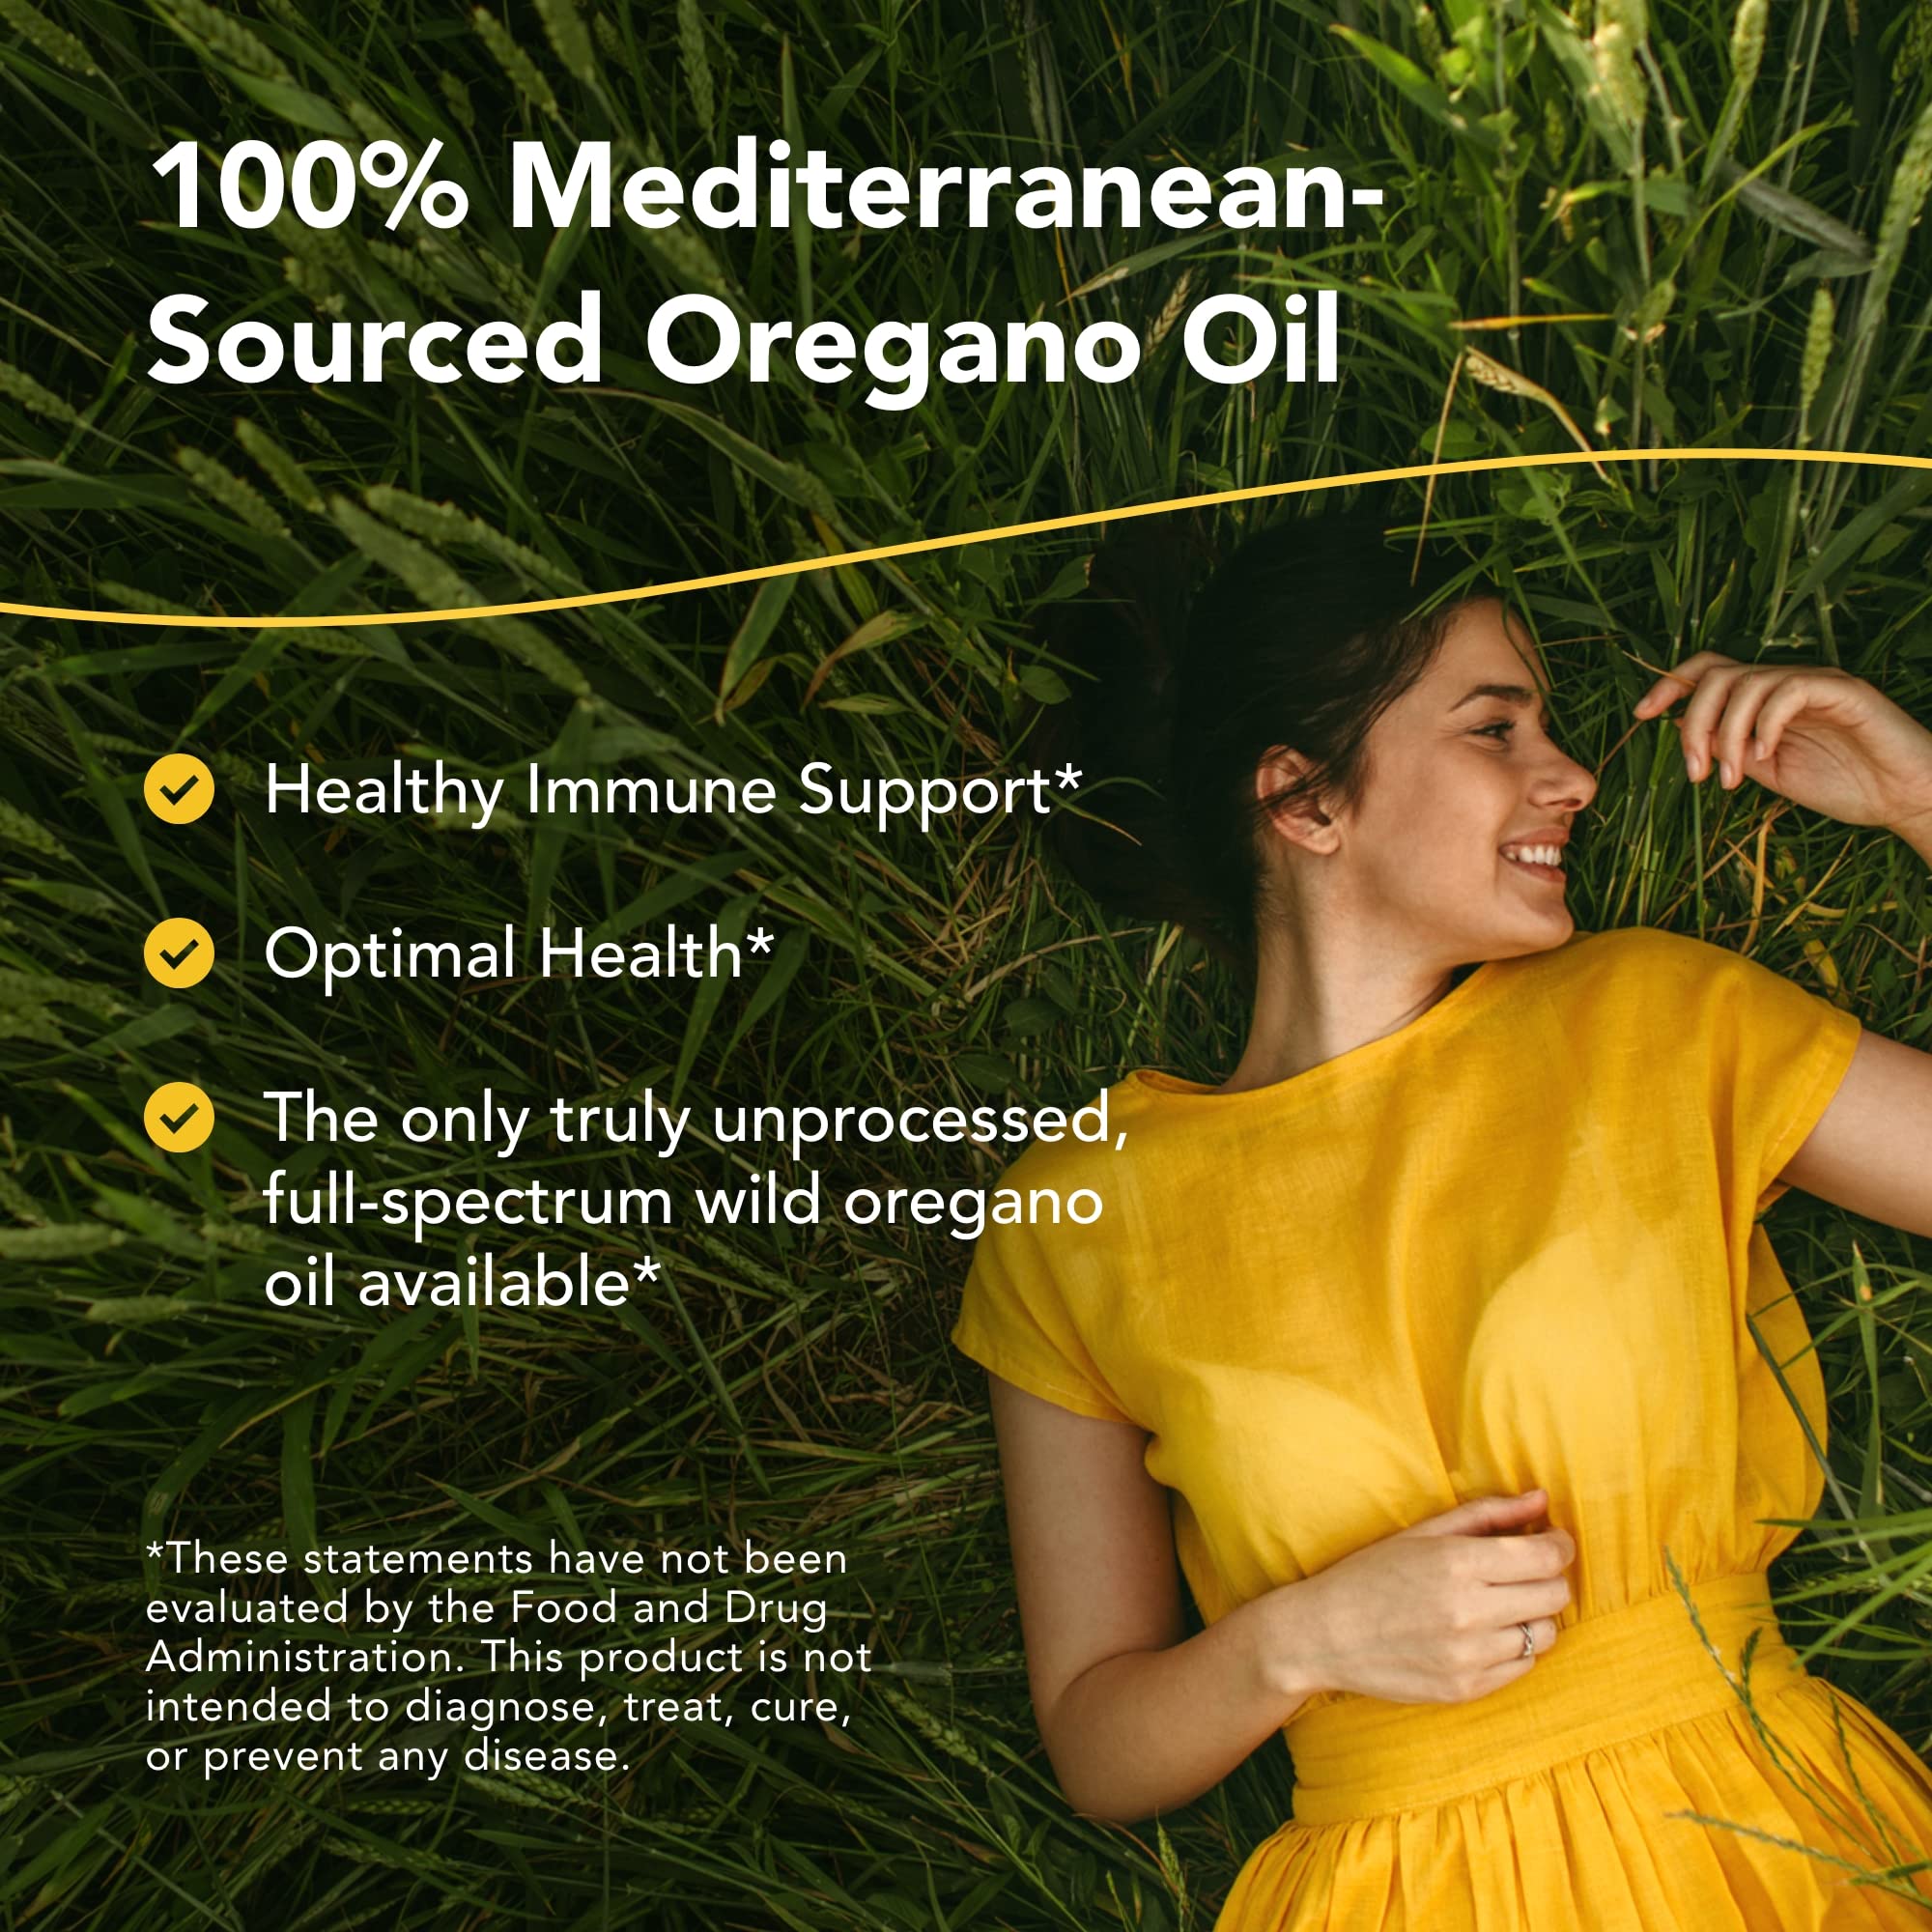 NORTH AMERICAN HERB & SPICE Oreganol P73 - 0.45 fl. oz. - Immune Support, Optimal Health - Unprocessed, Organic, Wild Oregano Oil - Mediterranean Source - Non-GMO - 194 Servings